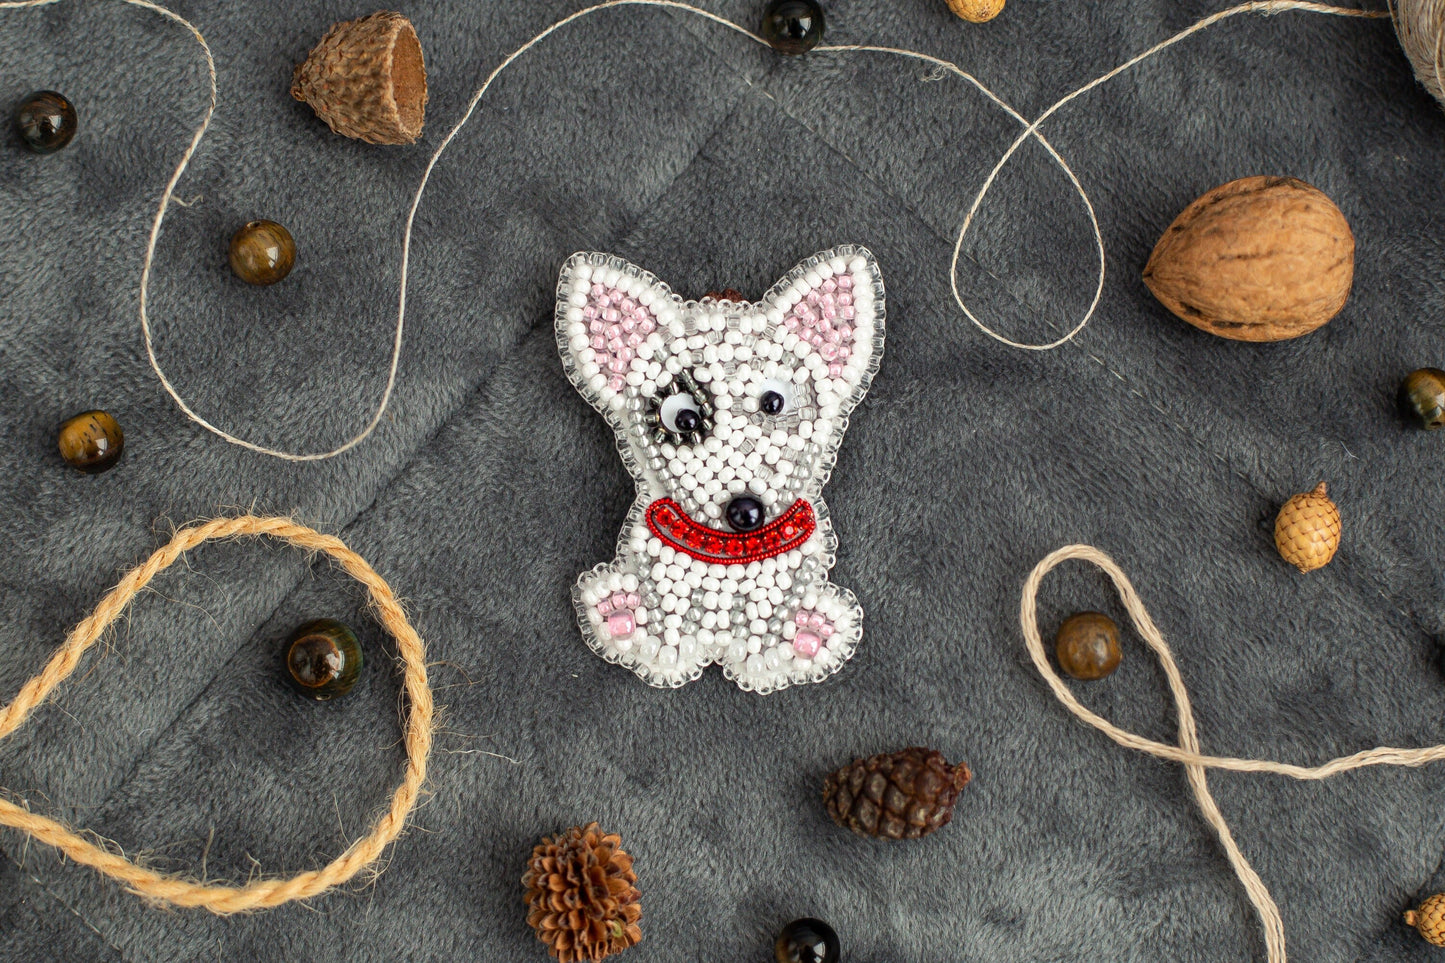 Bull Terrier Dog Bead embroidery kit. Seed Bead Brooch kit. DIY Craft kit. Beadweaving Kit. Needlework beading. Handmade Jewelry Making Kit